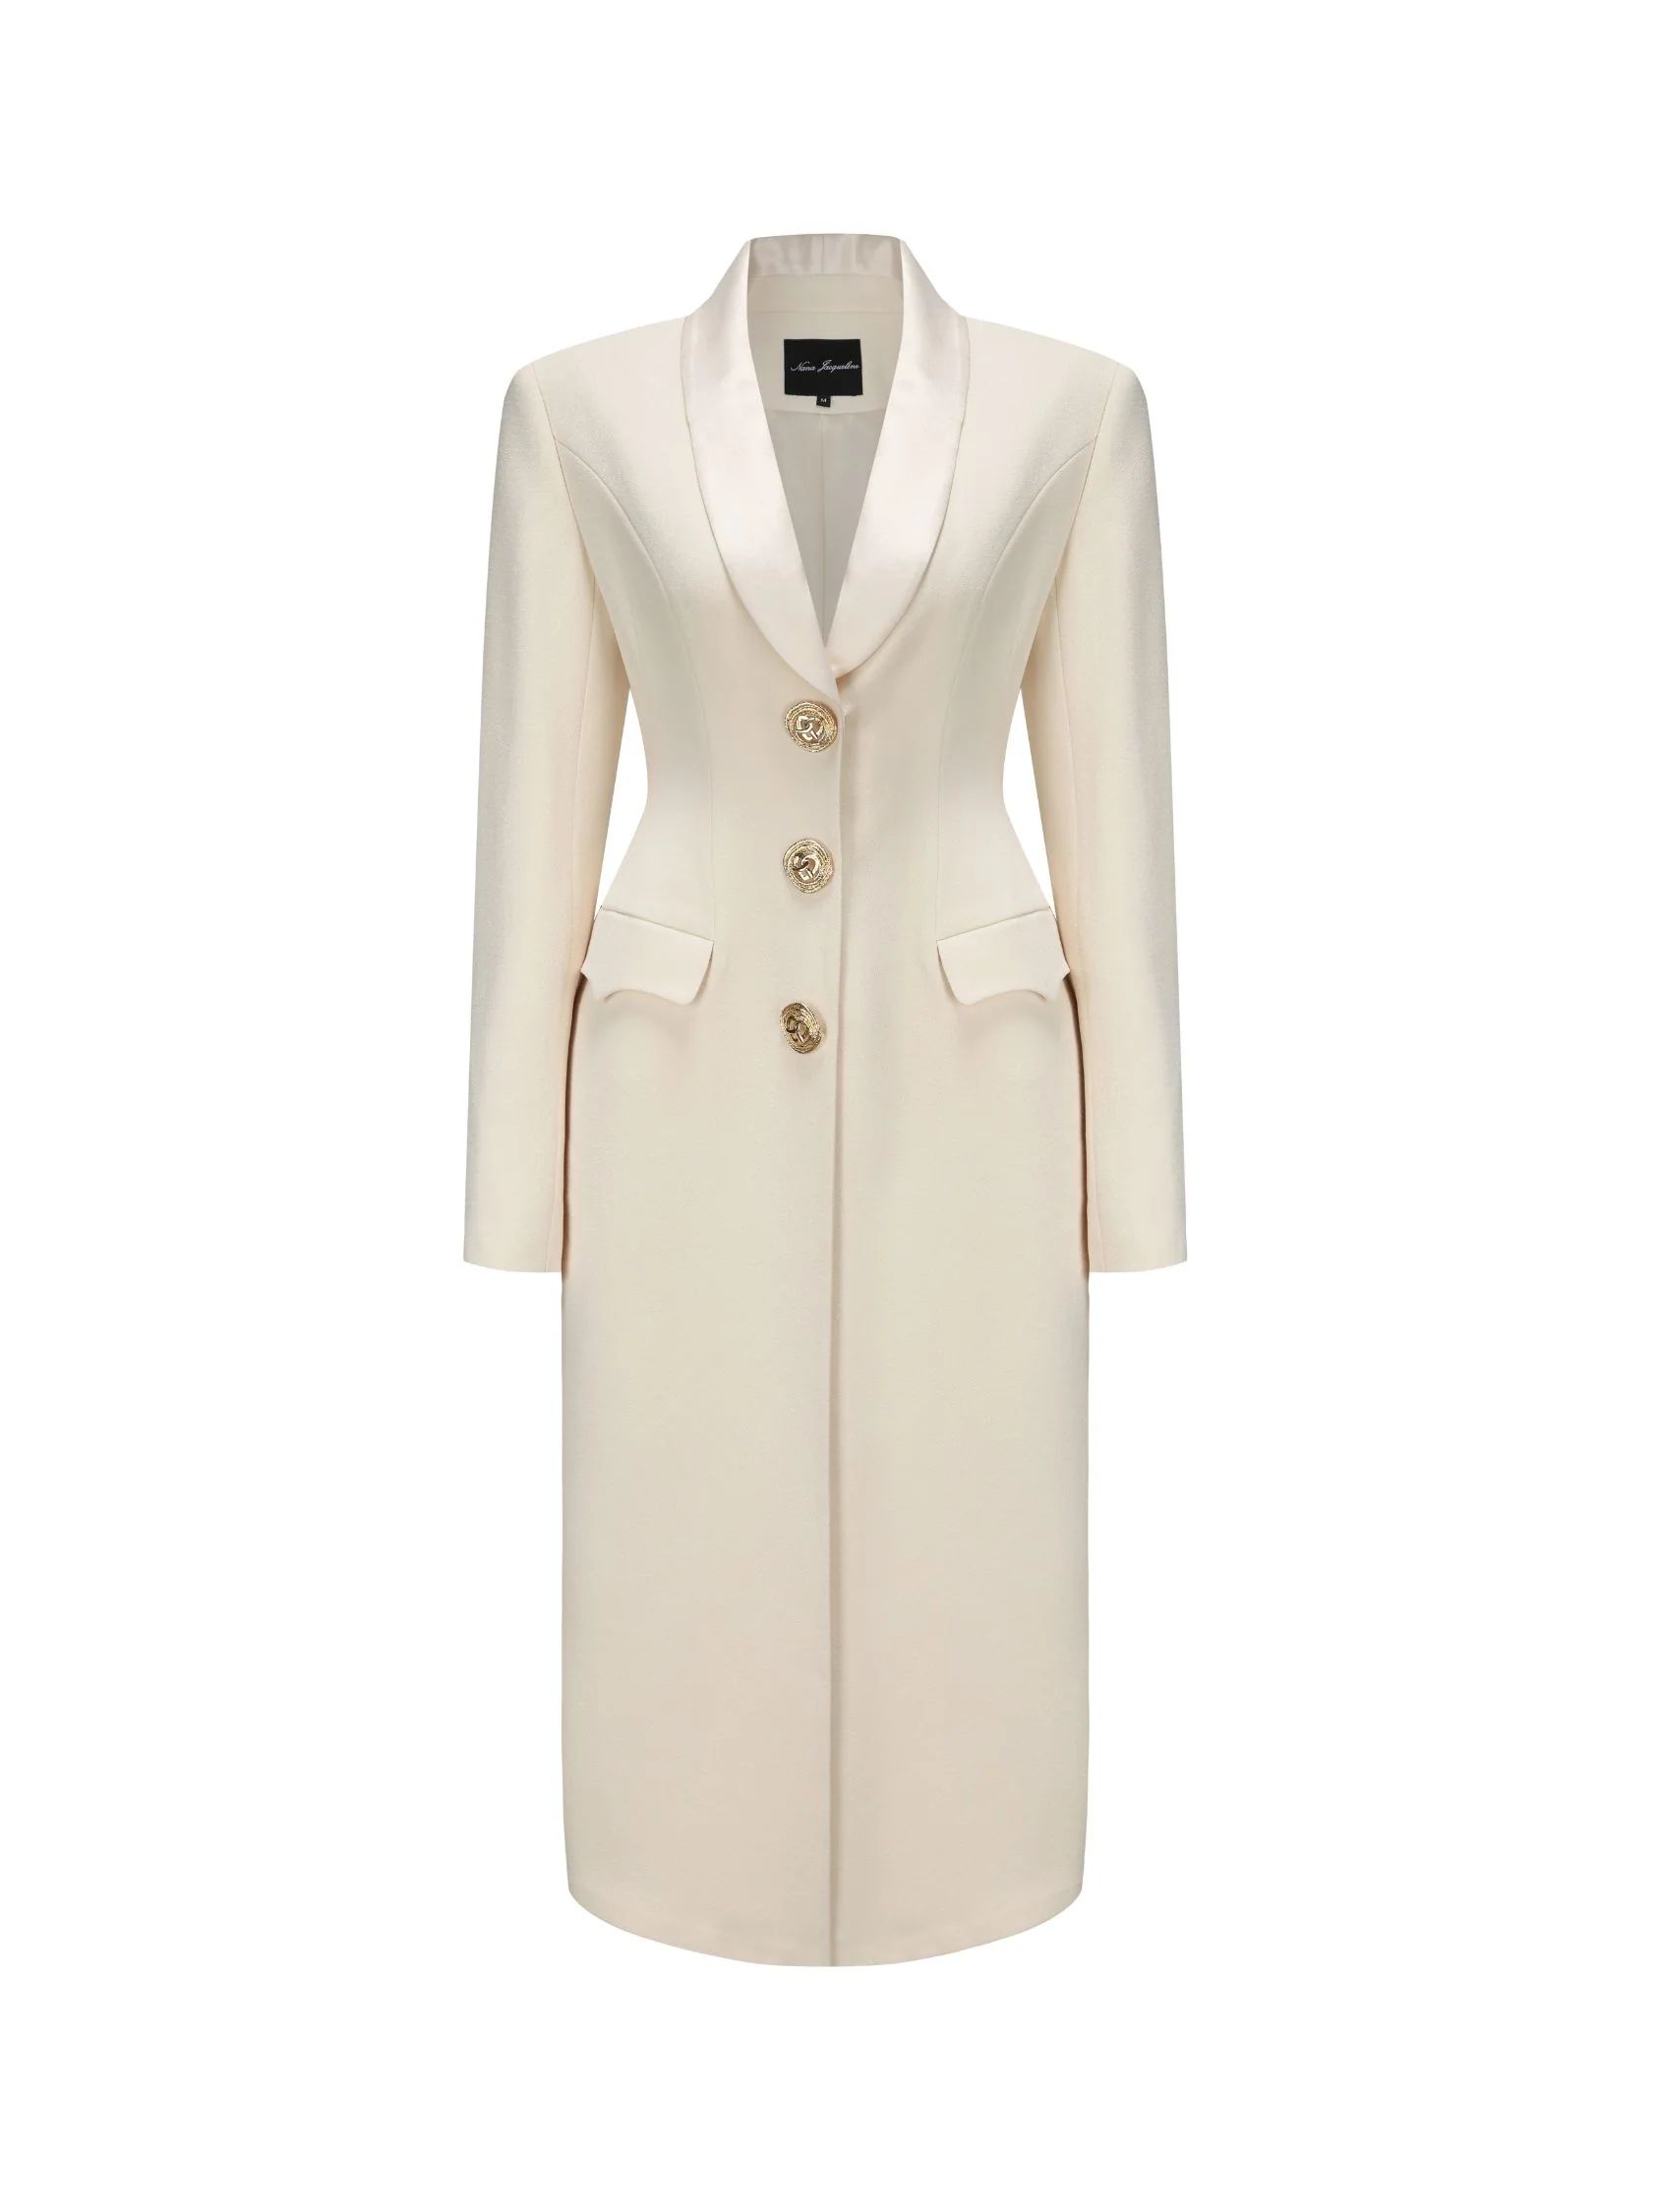 Evie Long Suit Jacket (White) | Nana Jacqueline